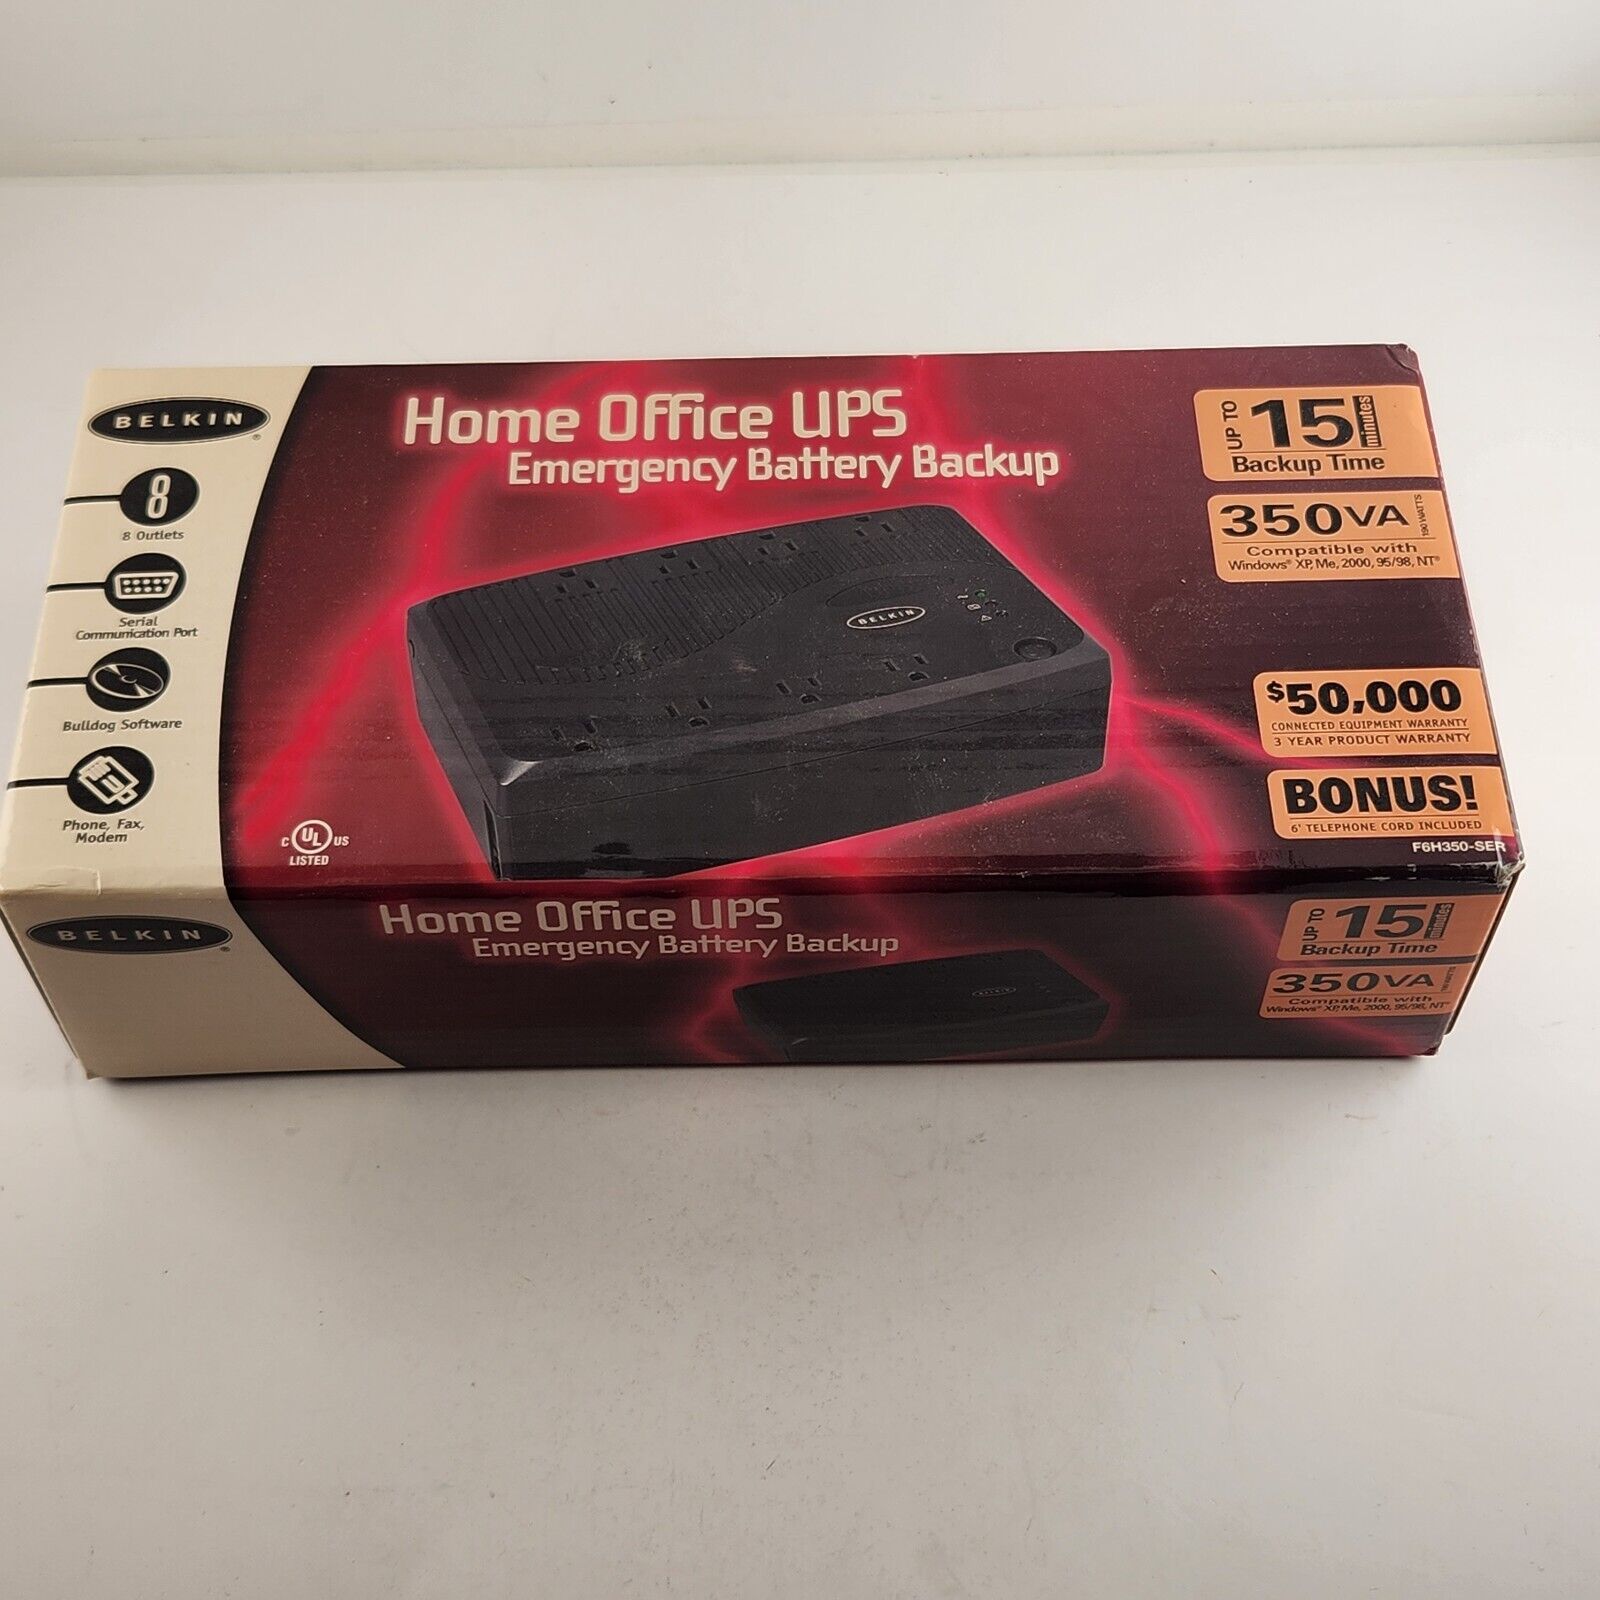 Belkin Home Office UPS Emergency Battery Backup 350VA Open Box NOS